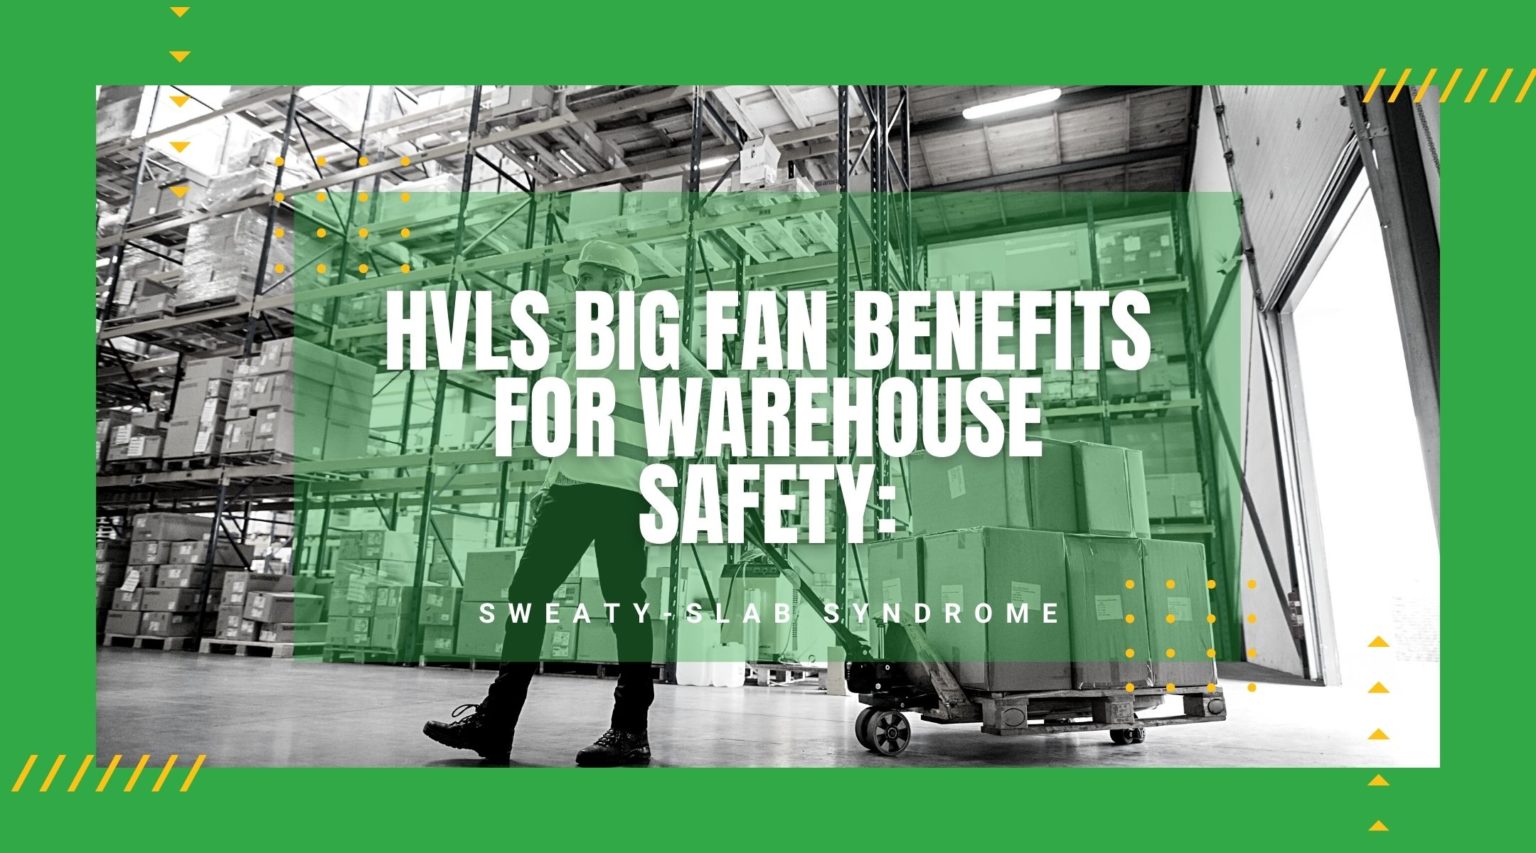 HVLS Big Fan Benefits for Warehouse Safety